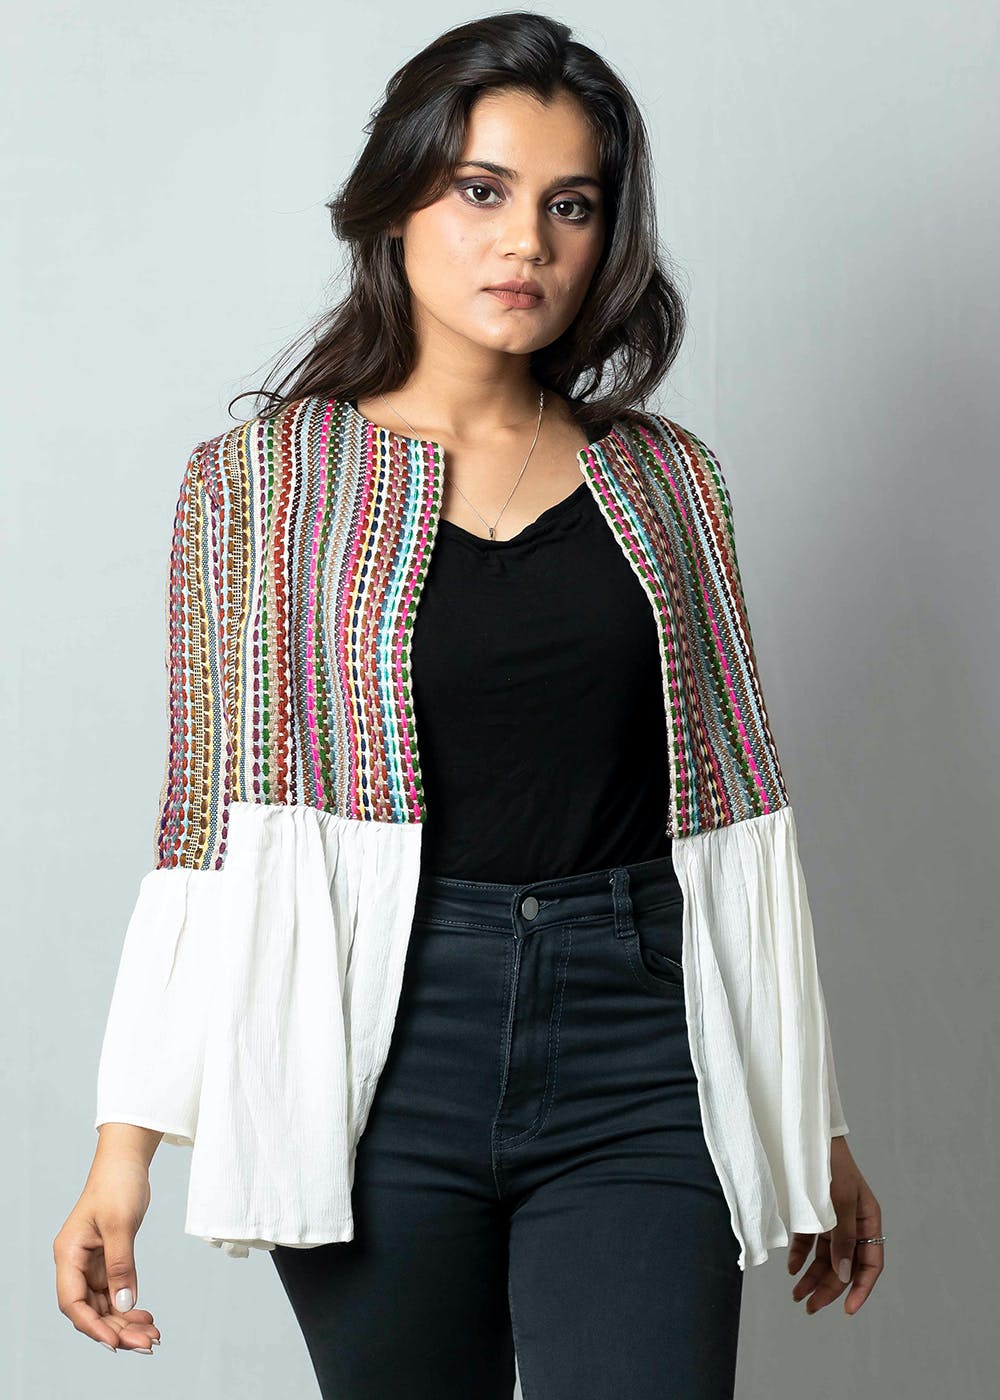 Stylish Flower Denim Jacket For Girls-thanhphatduhoc.com.vn